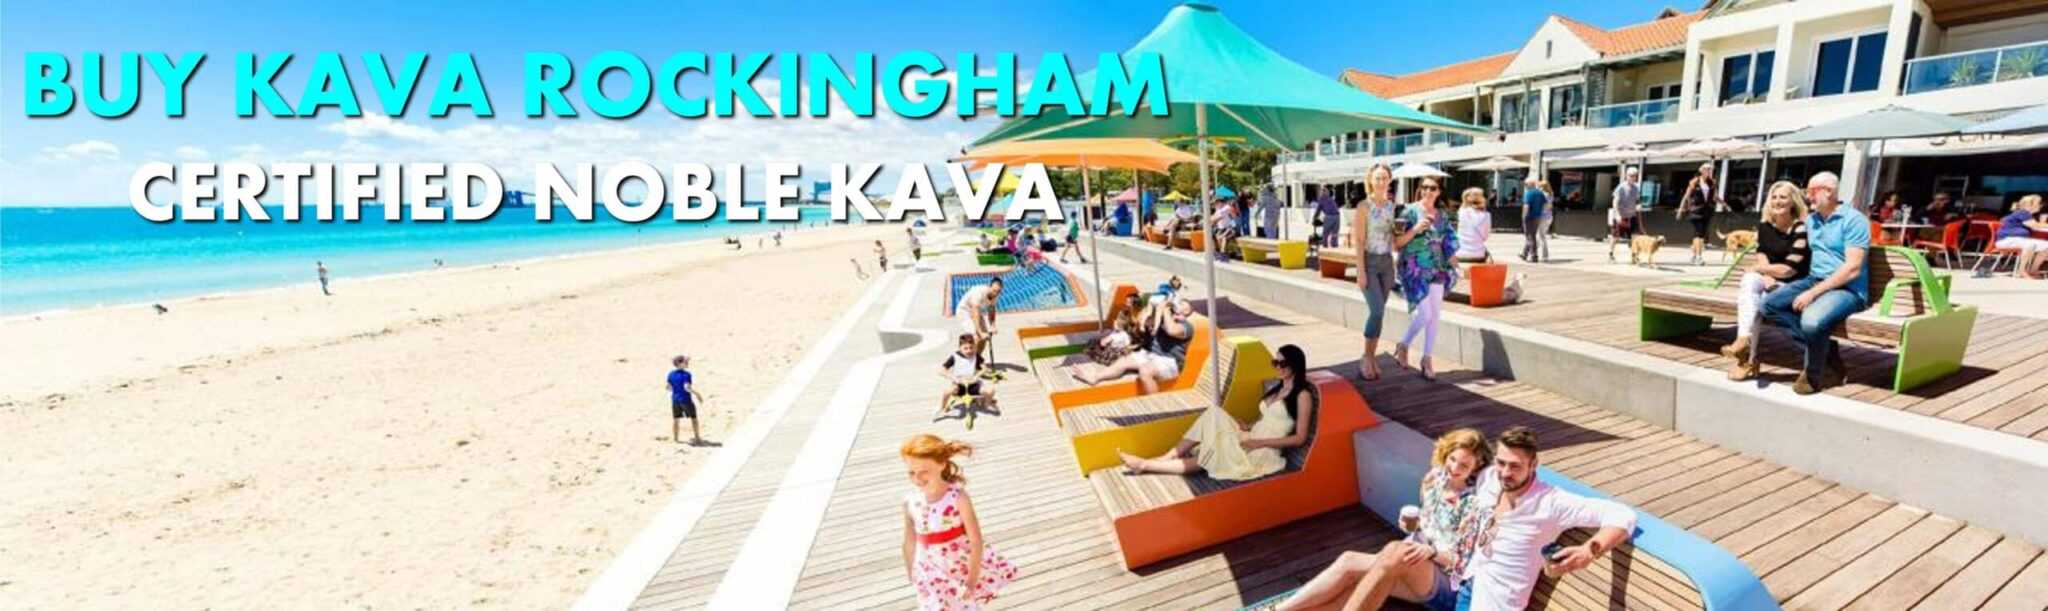 Beach scene in Rockingham Western Australia with caption Buy Kava Rockingham Certified Noble Kava